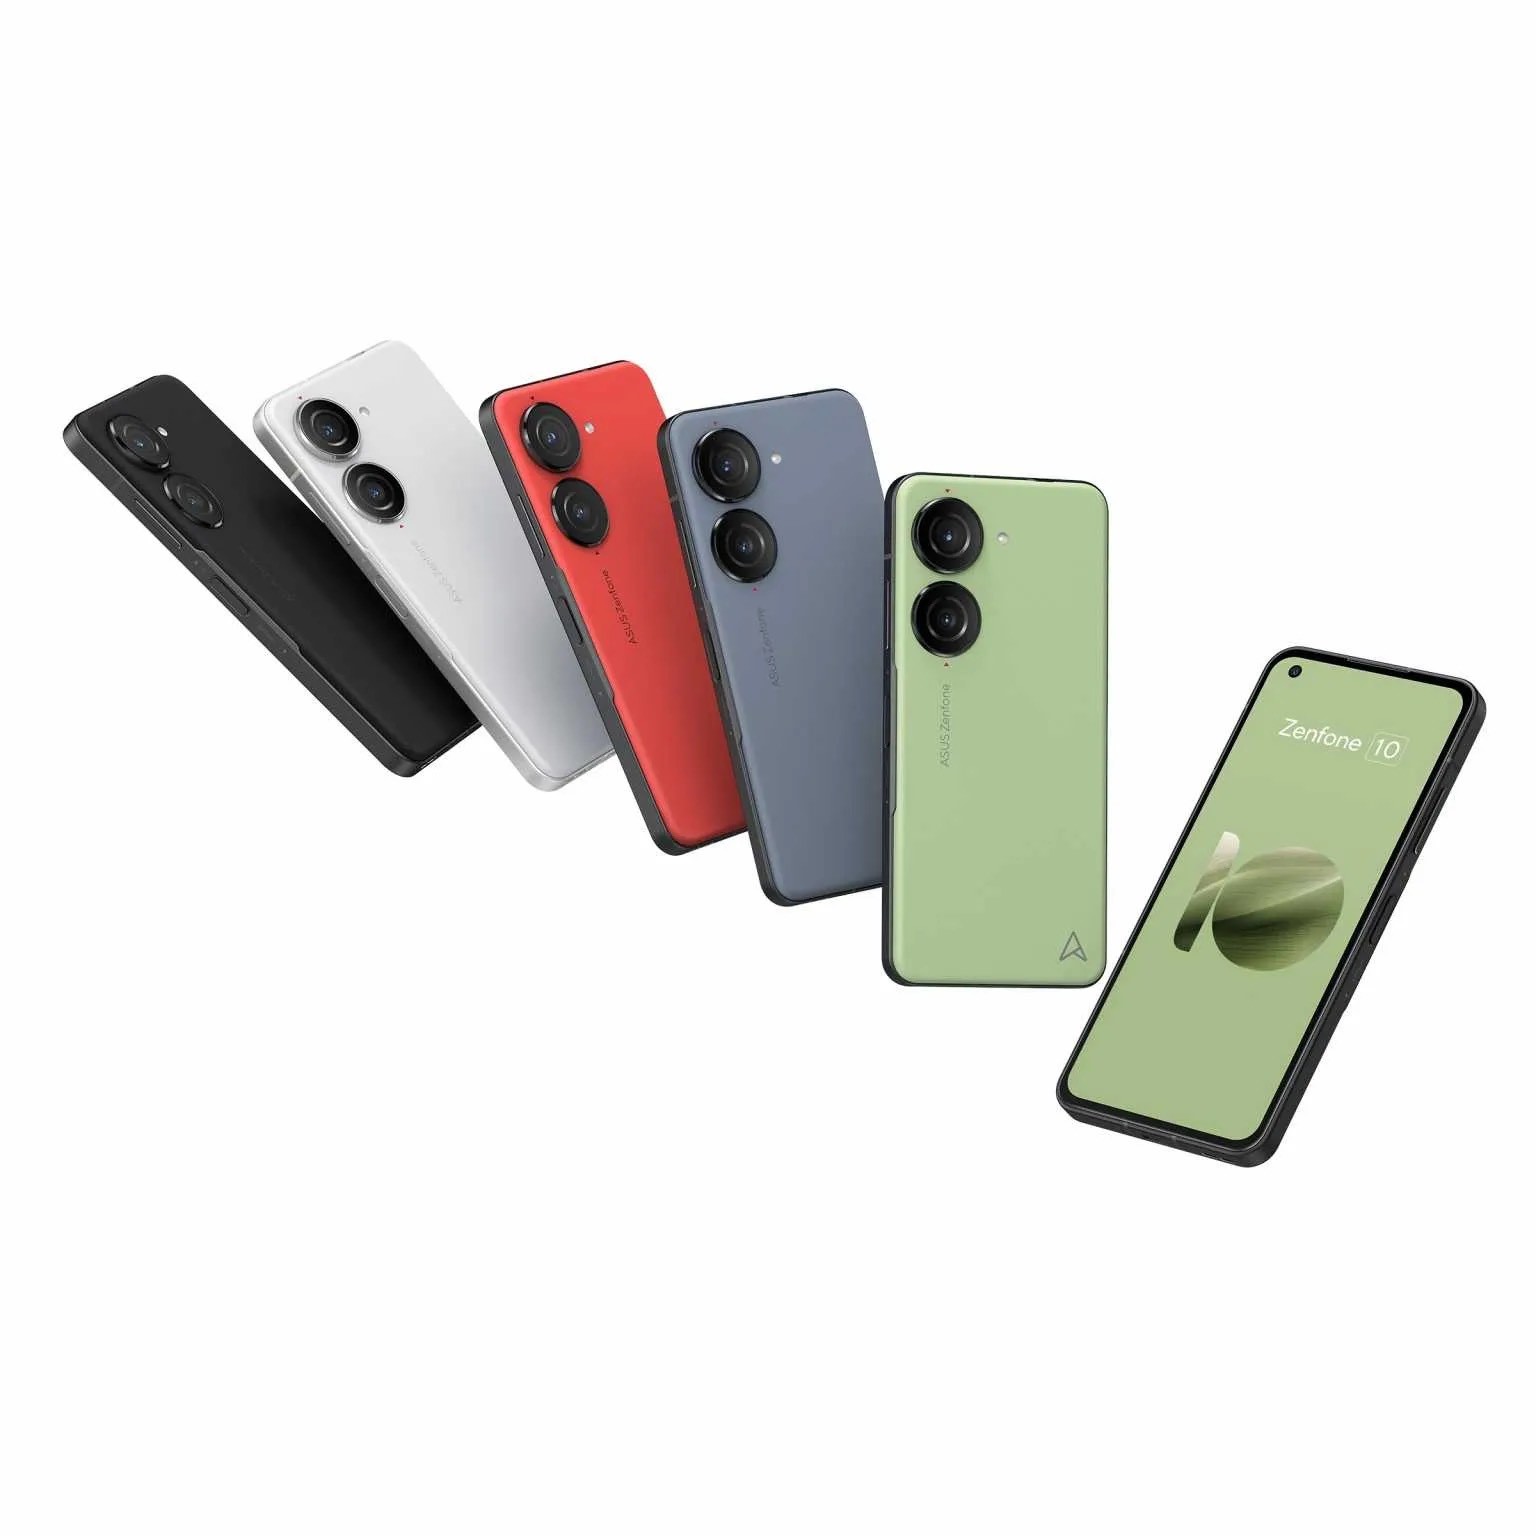 ASUS Zenfone 10 Press Renders Reveal Design, Color Options Ahead